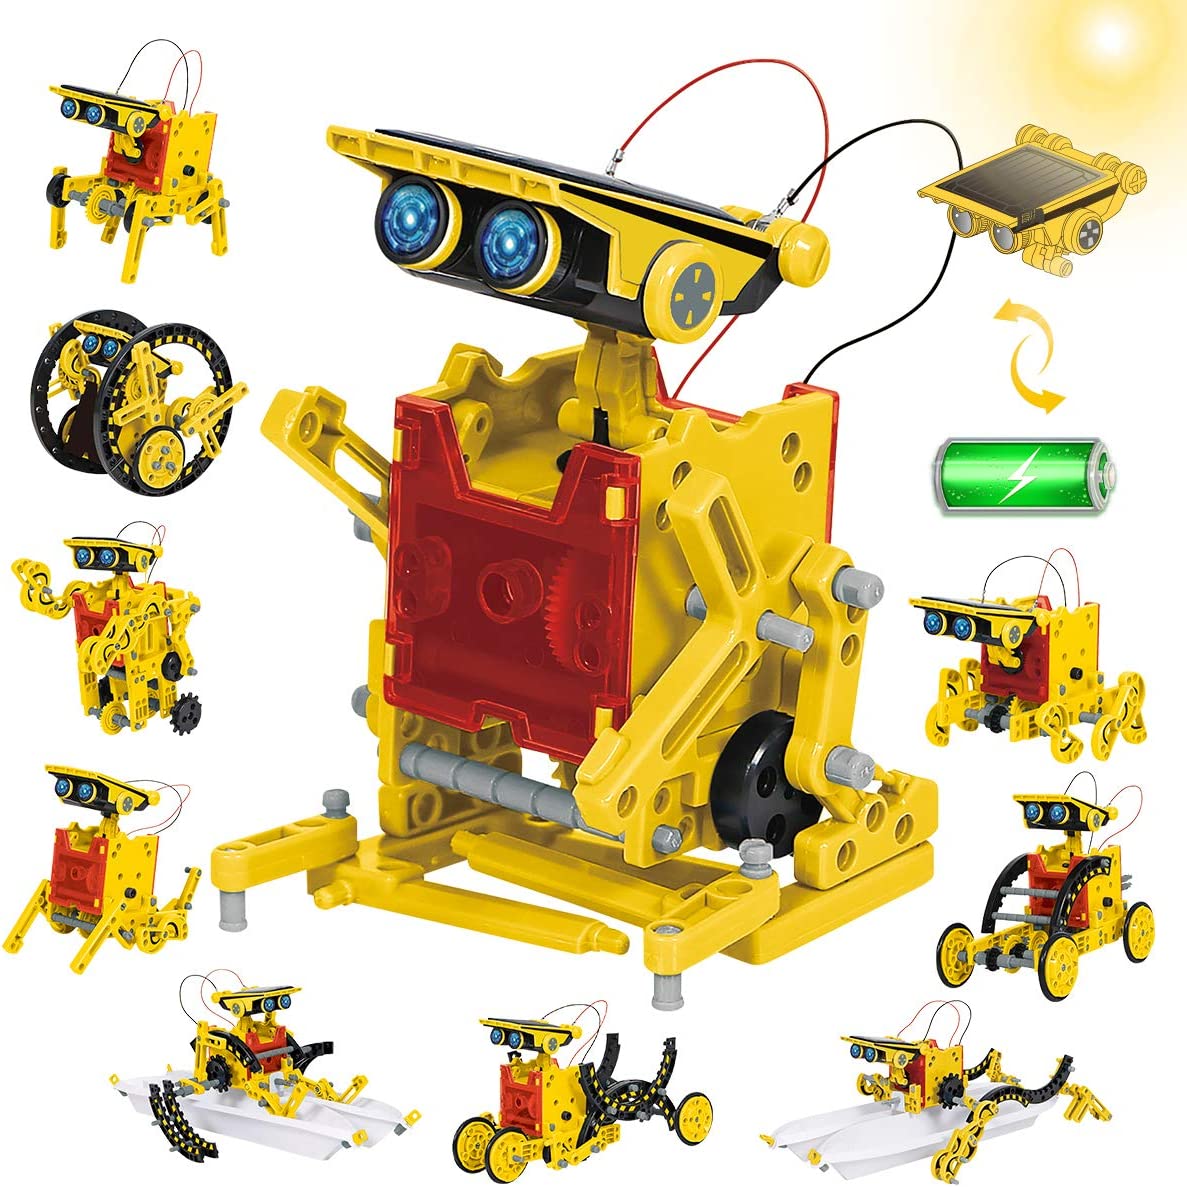 REMOKING Educational Solar Robot Kit